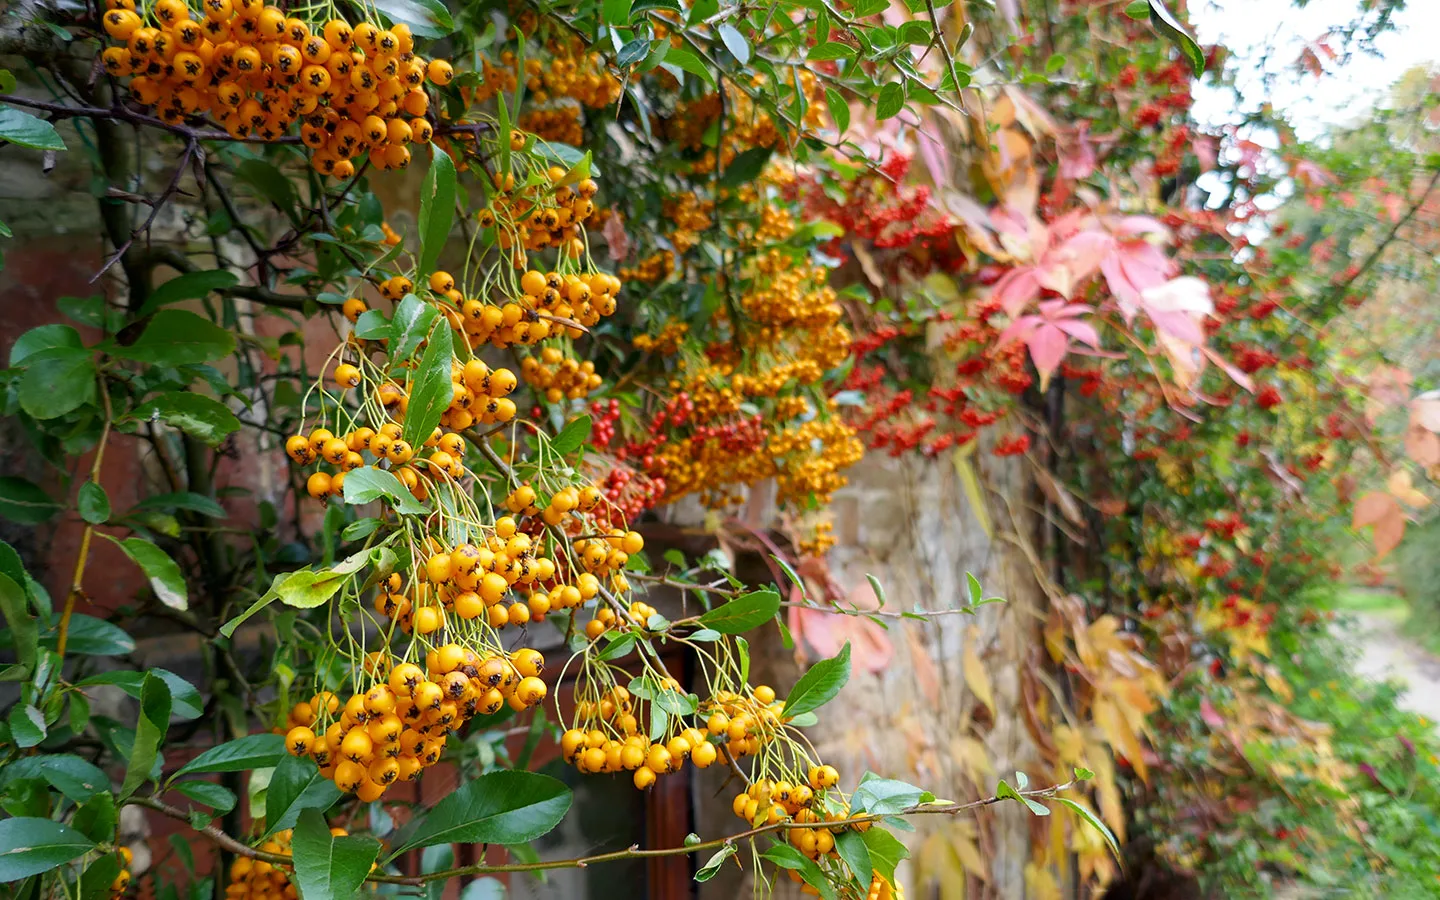 Colourful autumn berries